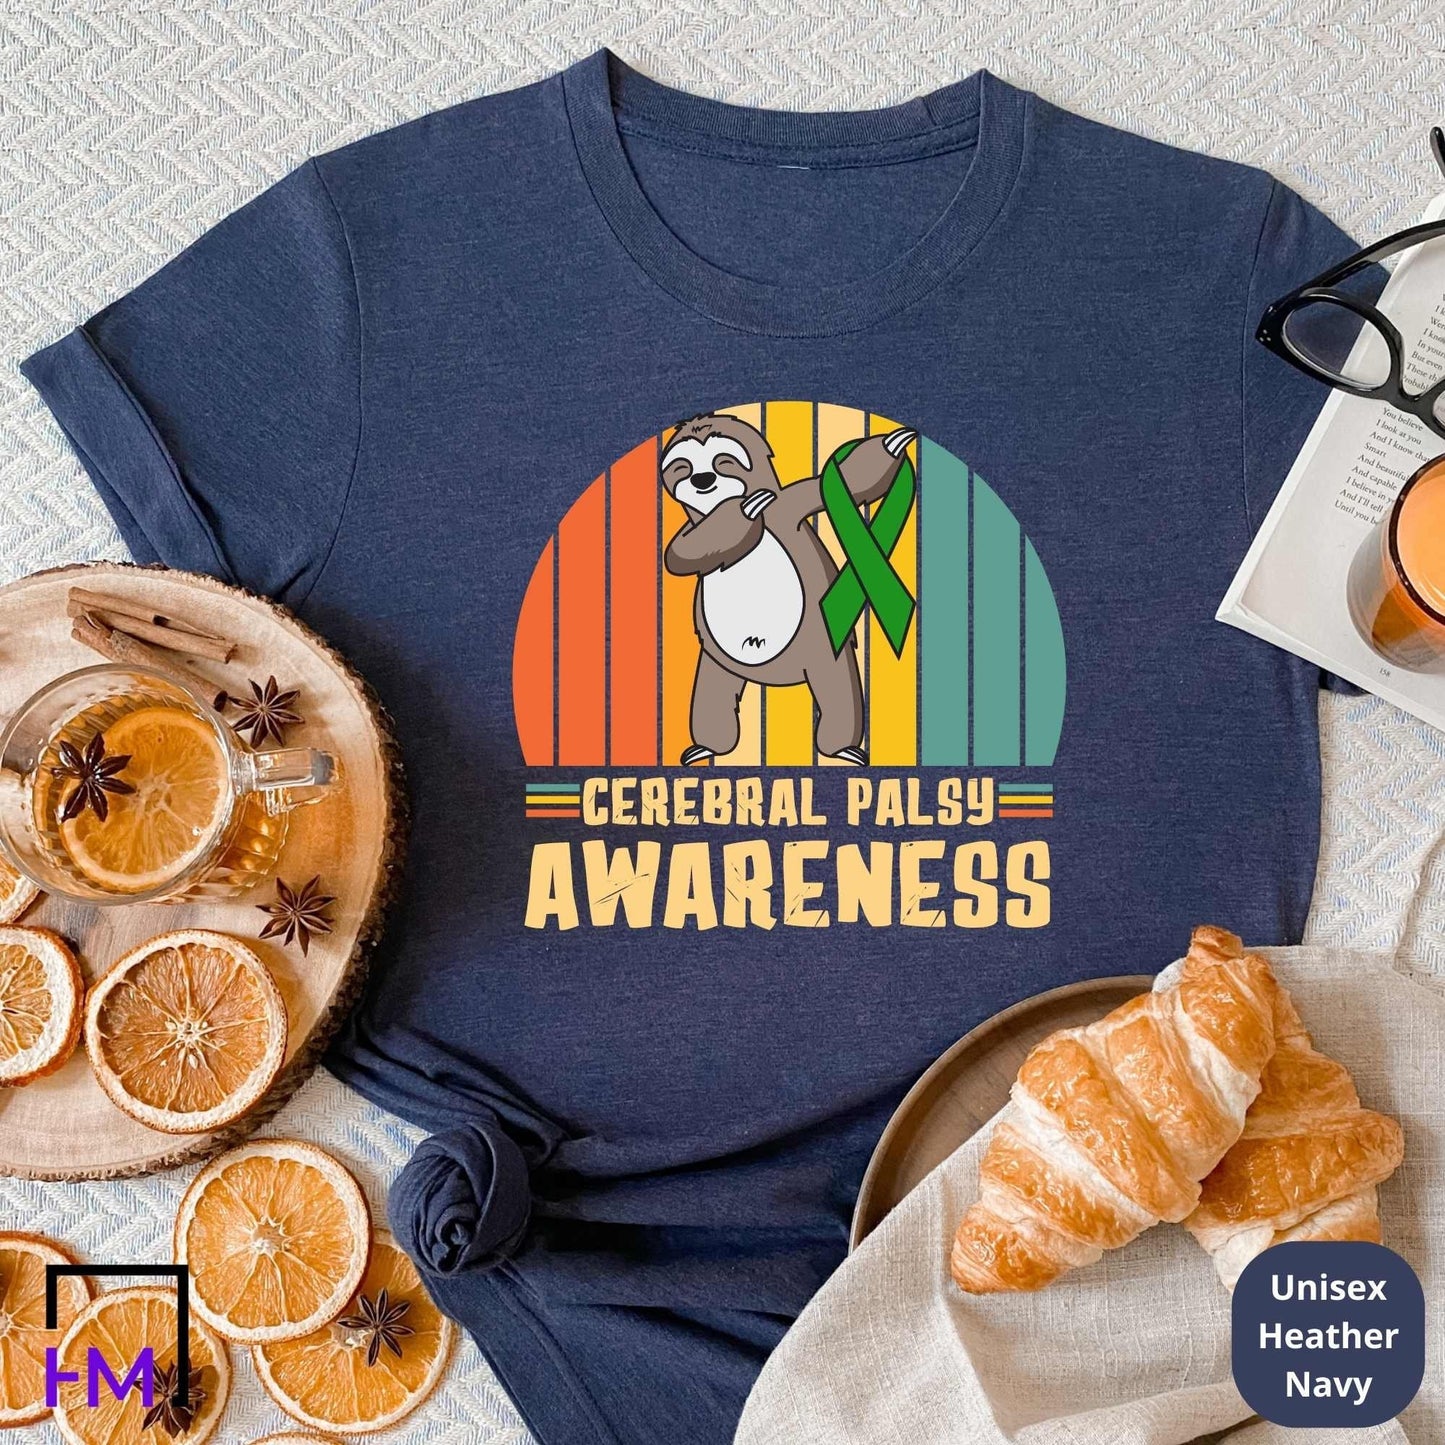 Cerebral Palsy Awareness Shirt, Warrior Gift, CP Awareness, Cerebral Palsy Gifts, Survivor Support Matching Group Tops, Tees & Sweatshirts HMDesignStudioUS